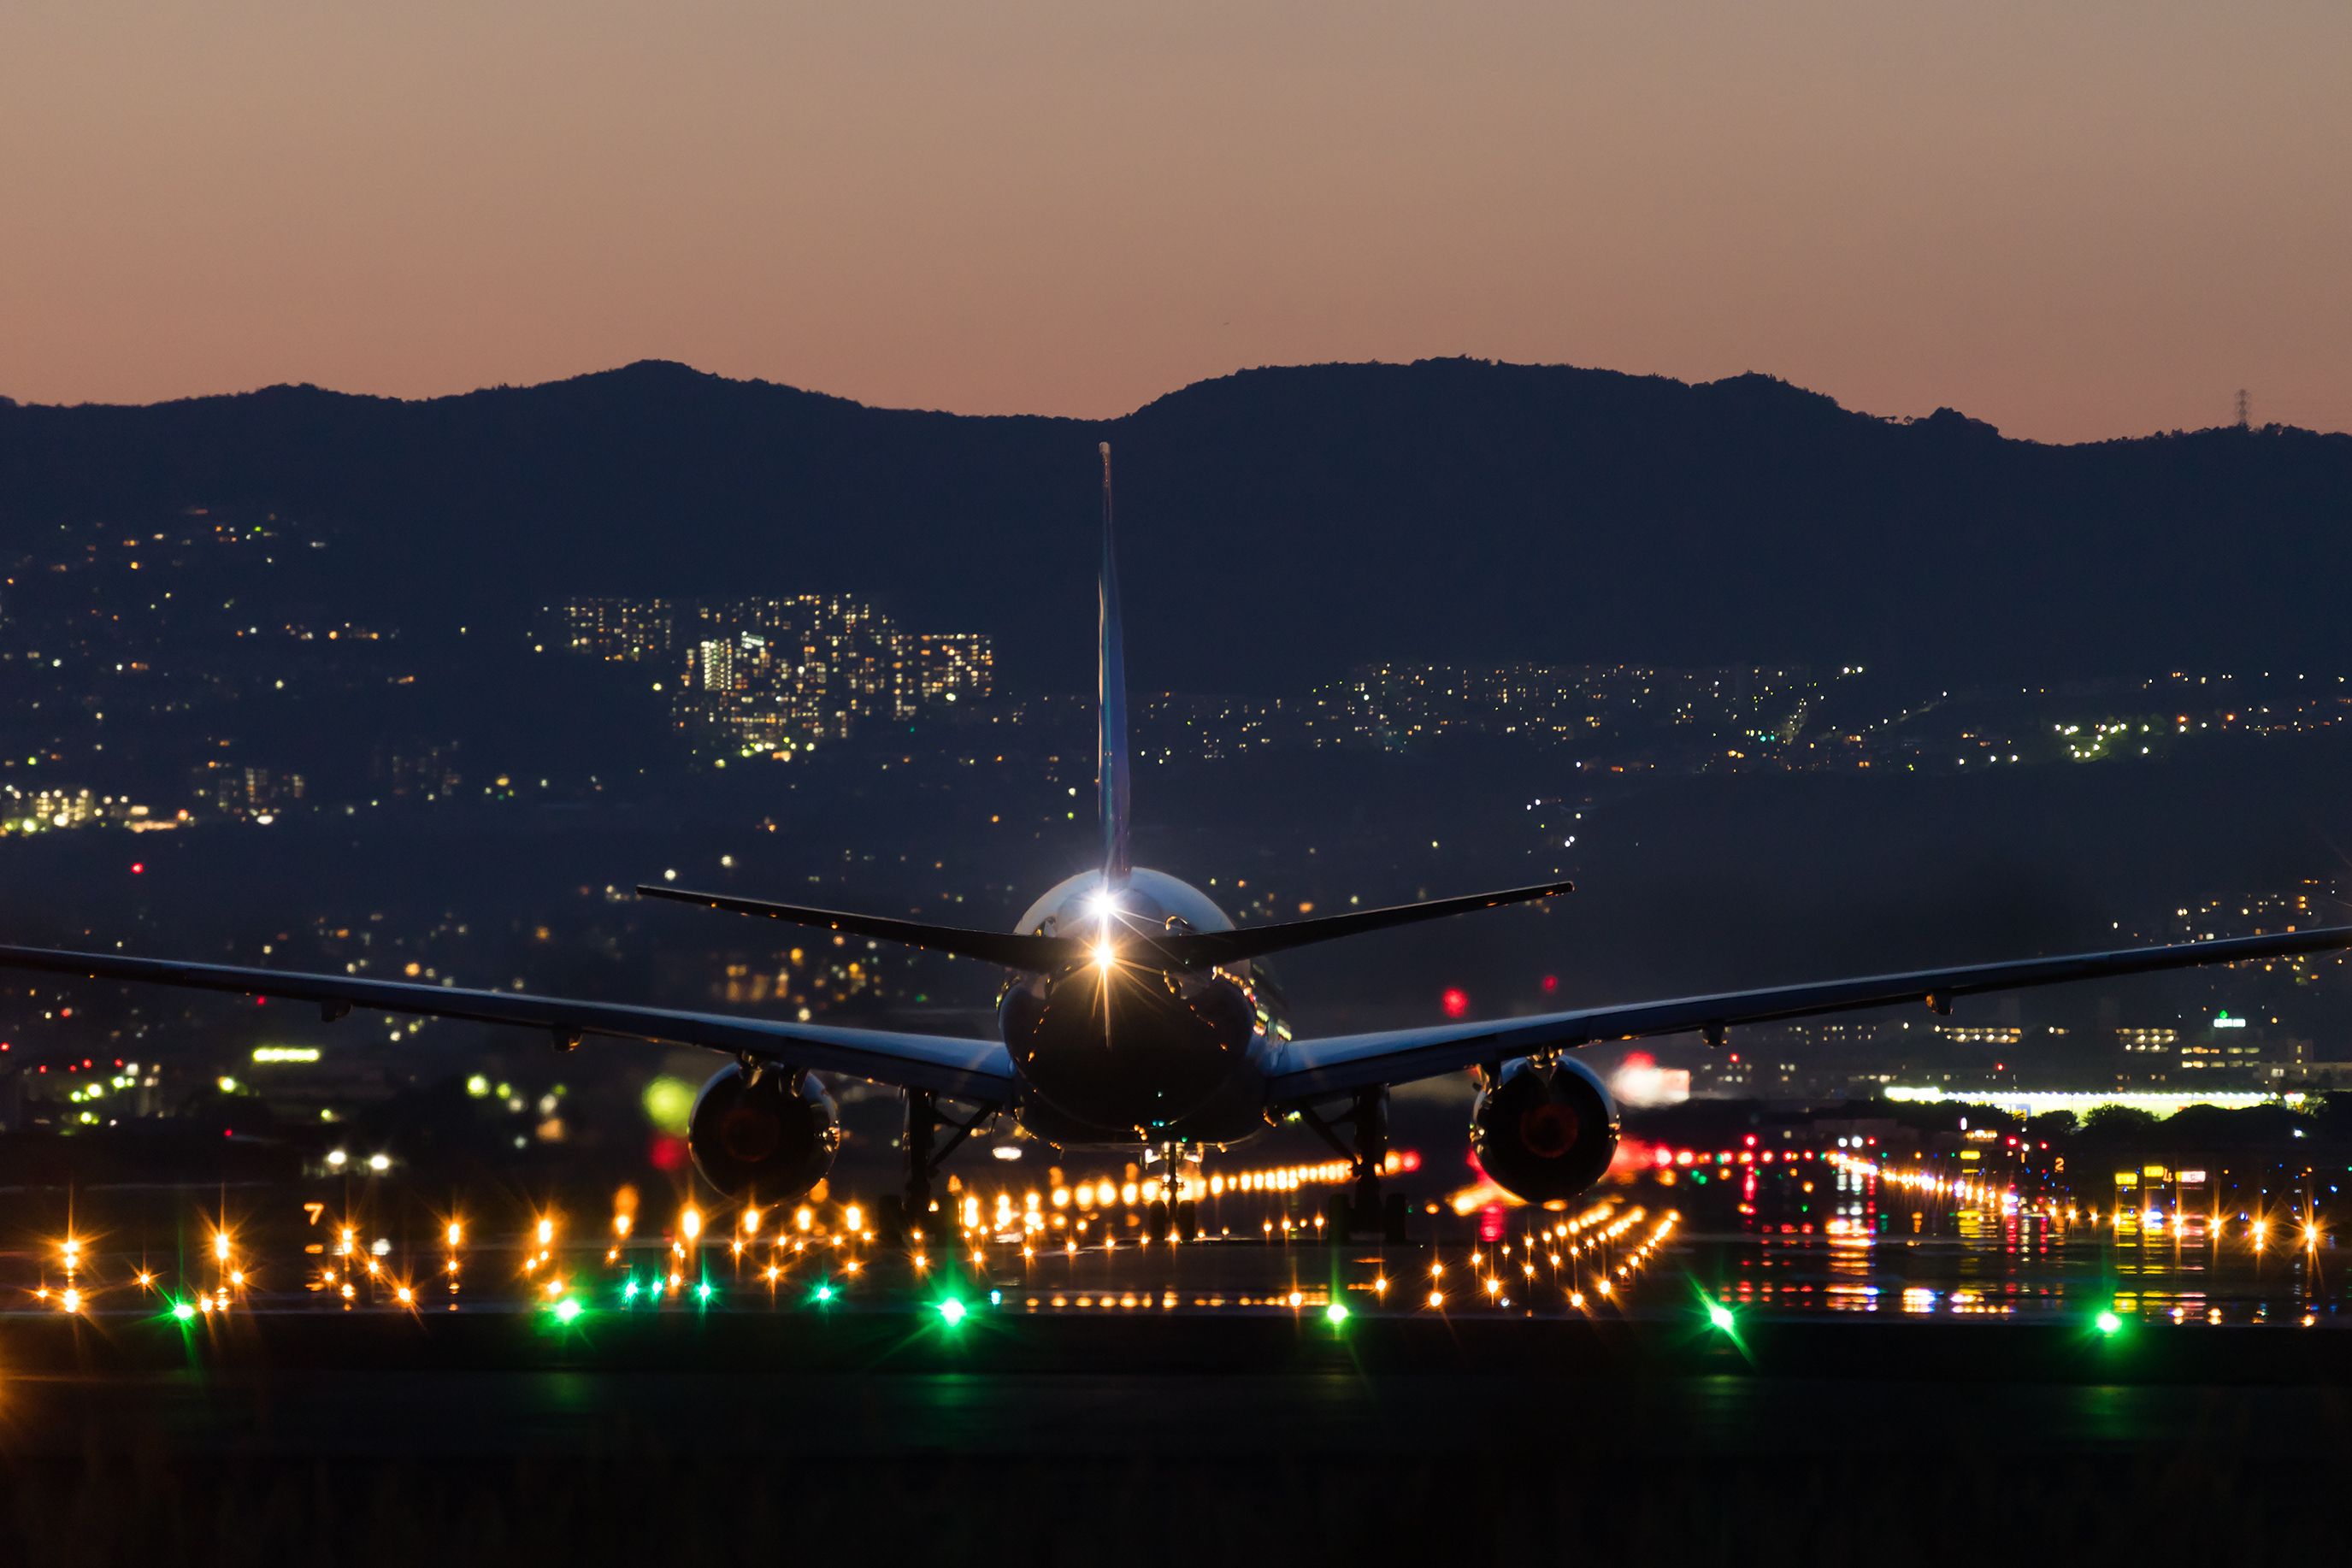 An aircraft landing at night.